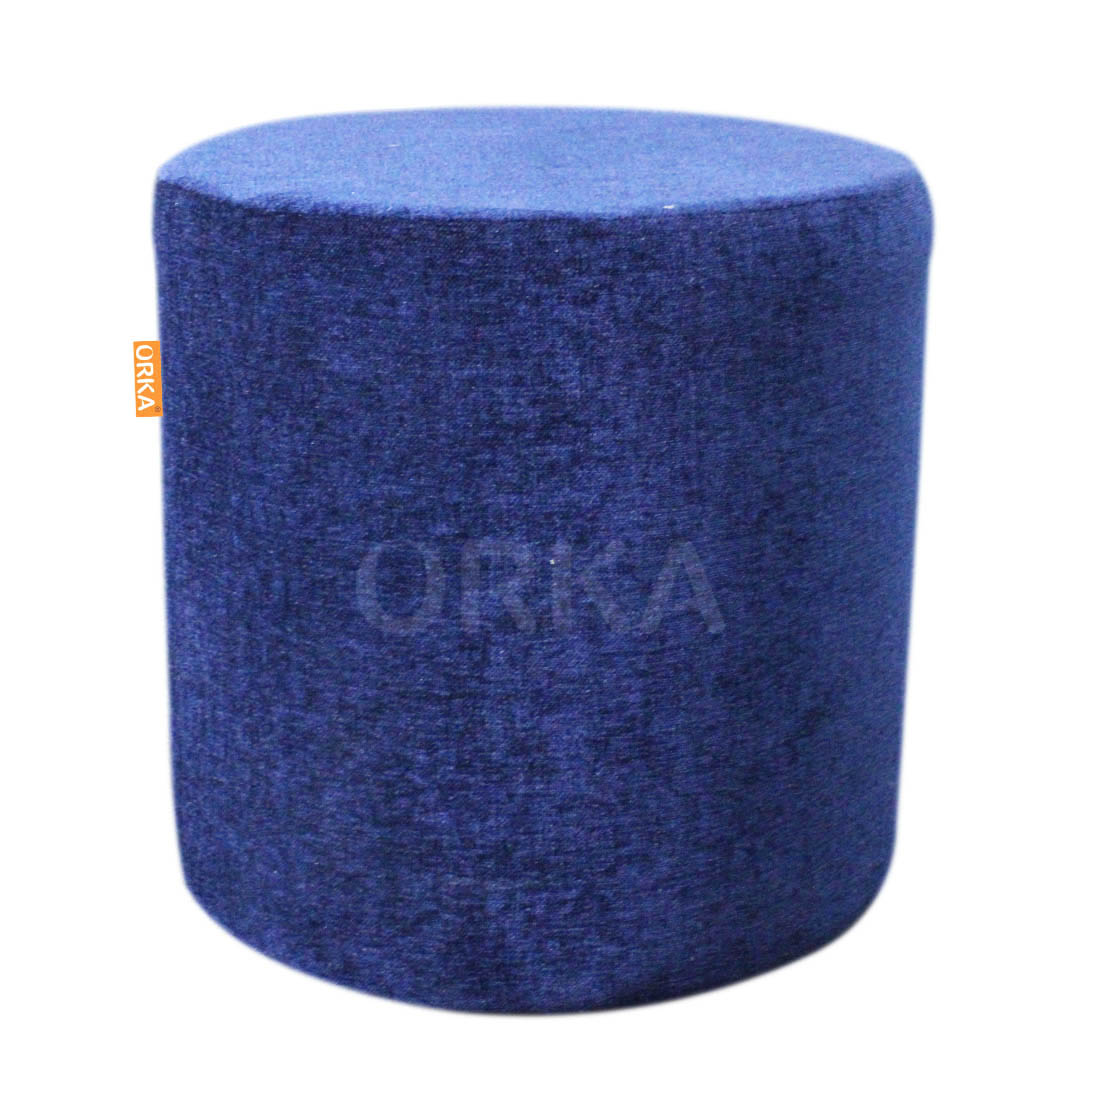 Orka Ottoman Molfino Cylindrical Blue  